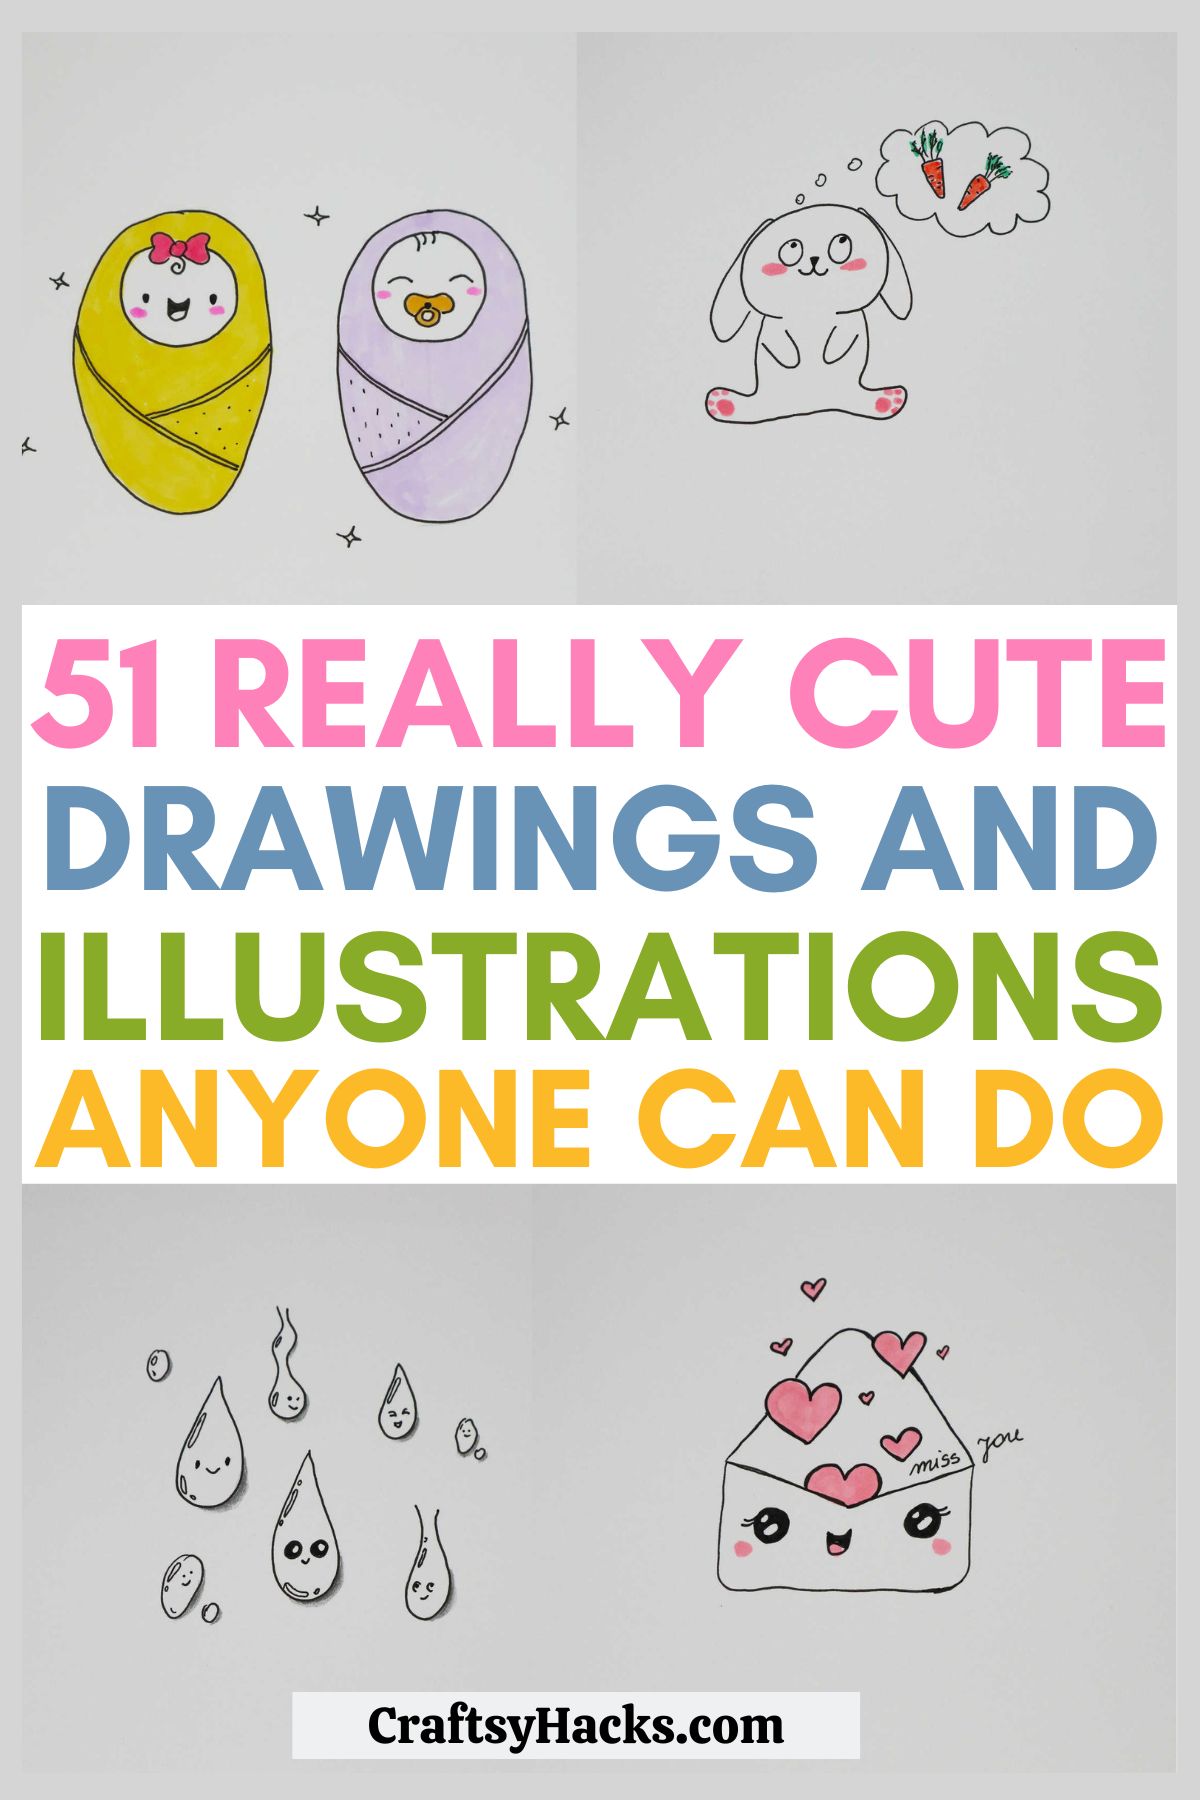 Easy Cute Love Cool Drawings | Легкие рисунки, Артбуки, Эскизы открыток-saigonsouth.com.vn